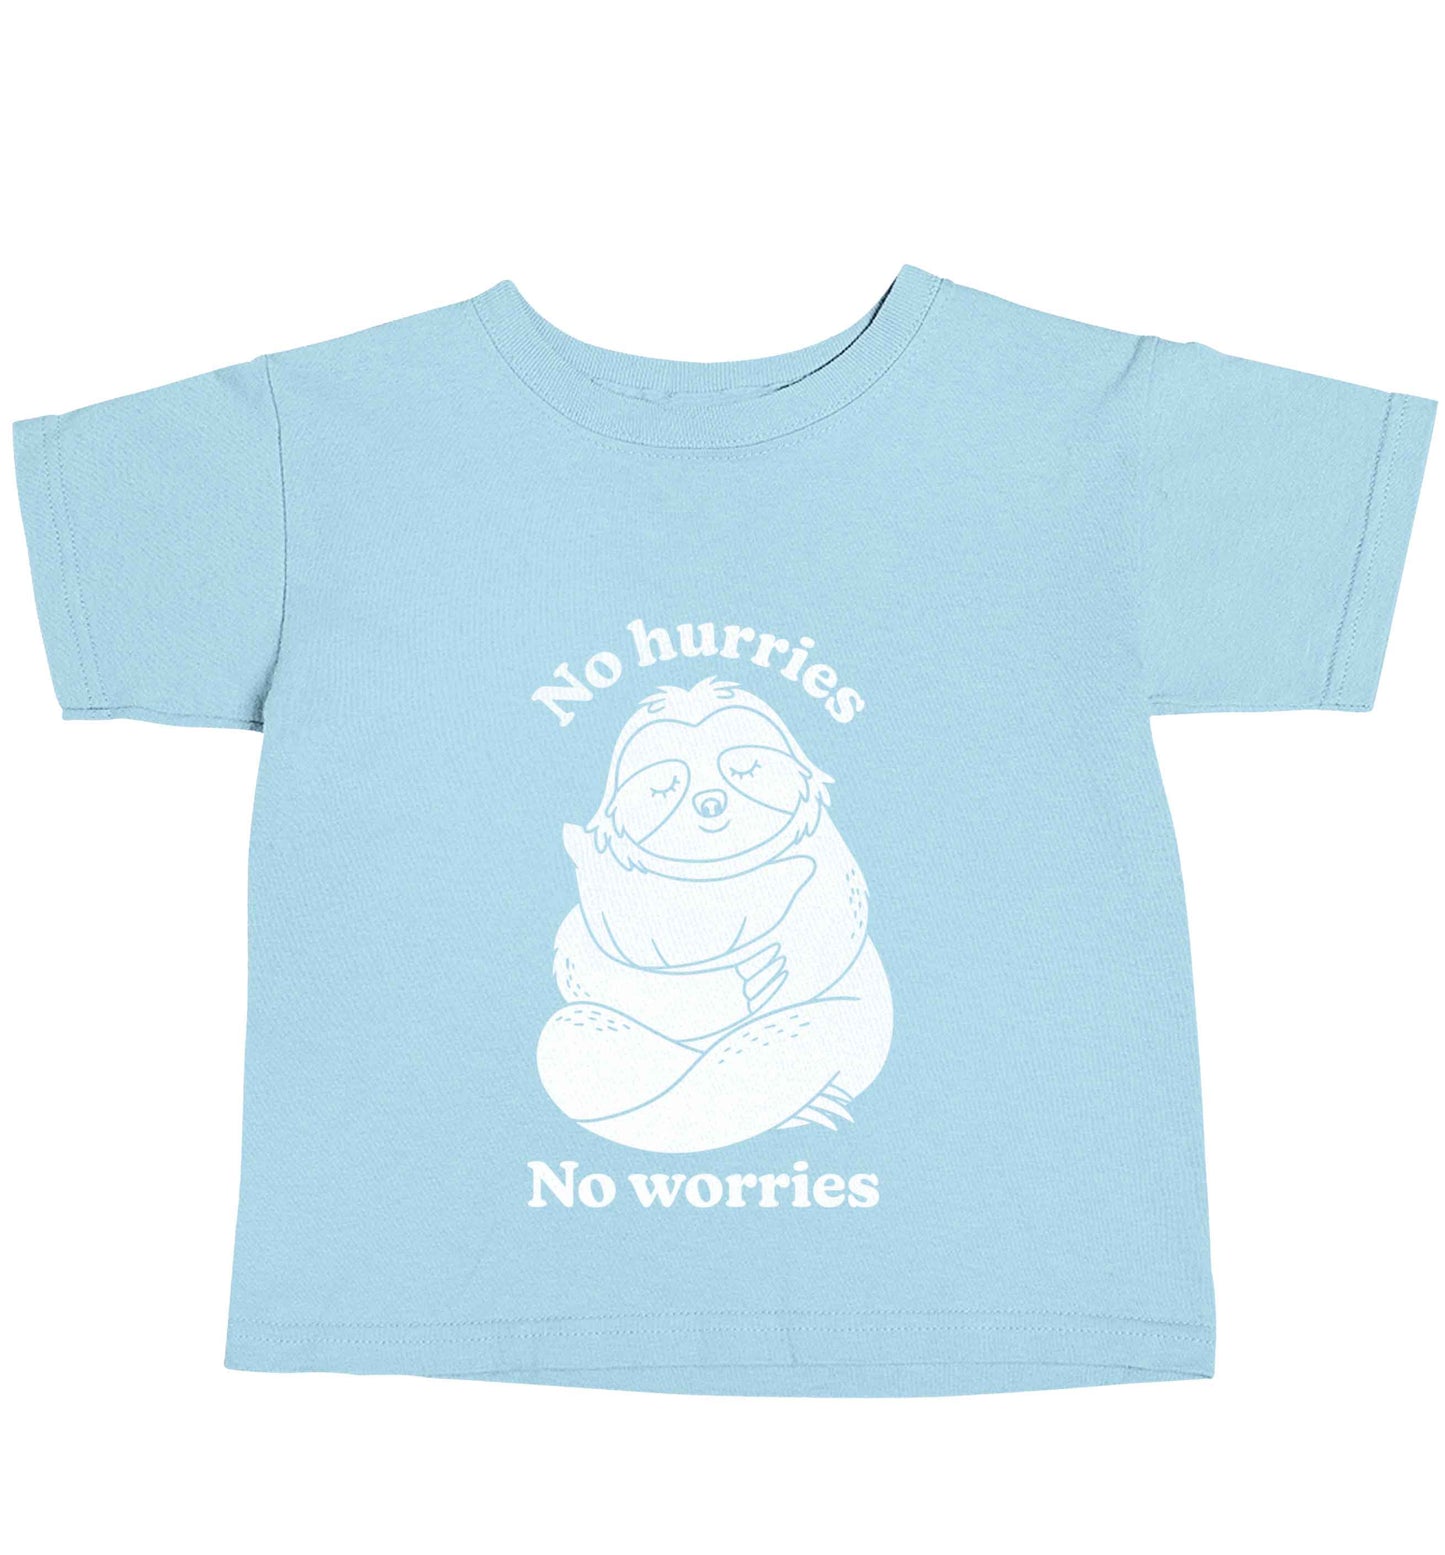 No hurries no worries light blue baby toddler Tshirt 2 Years